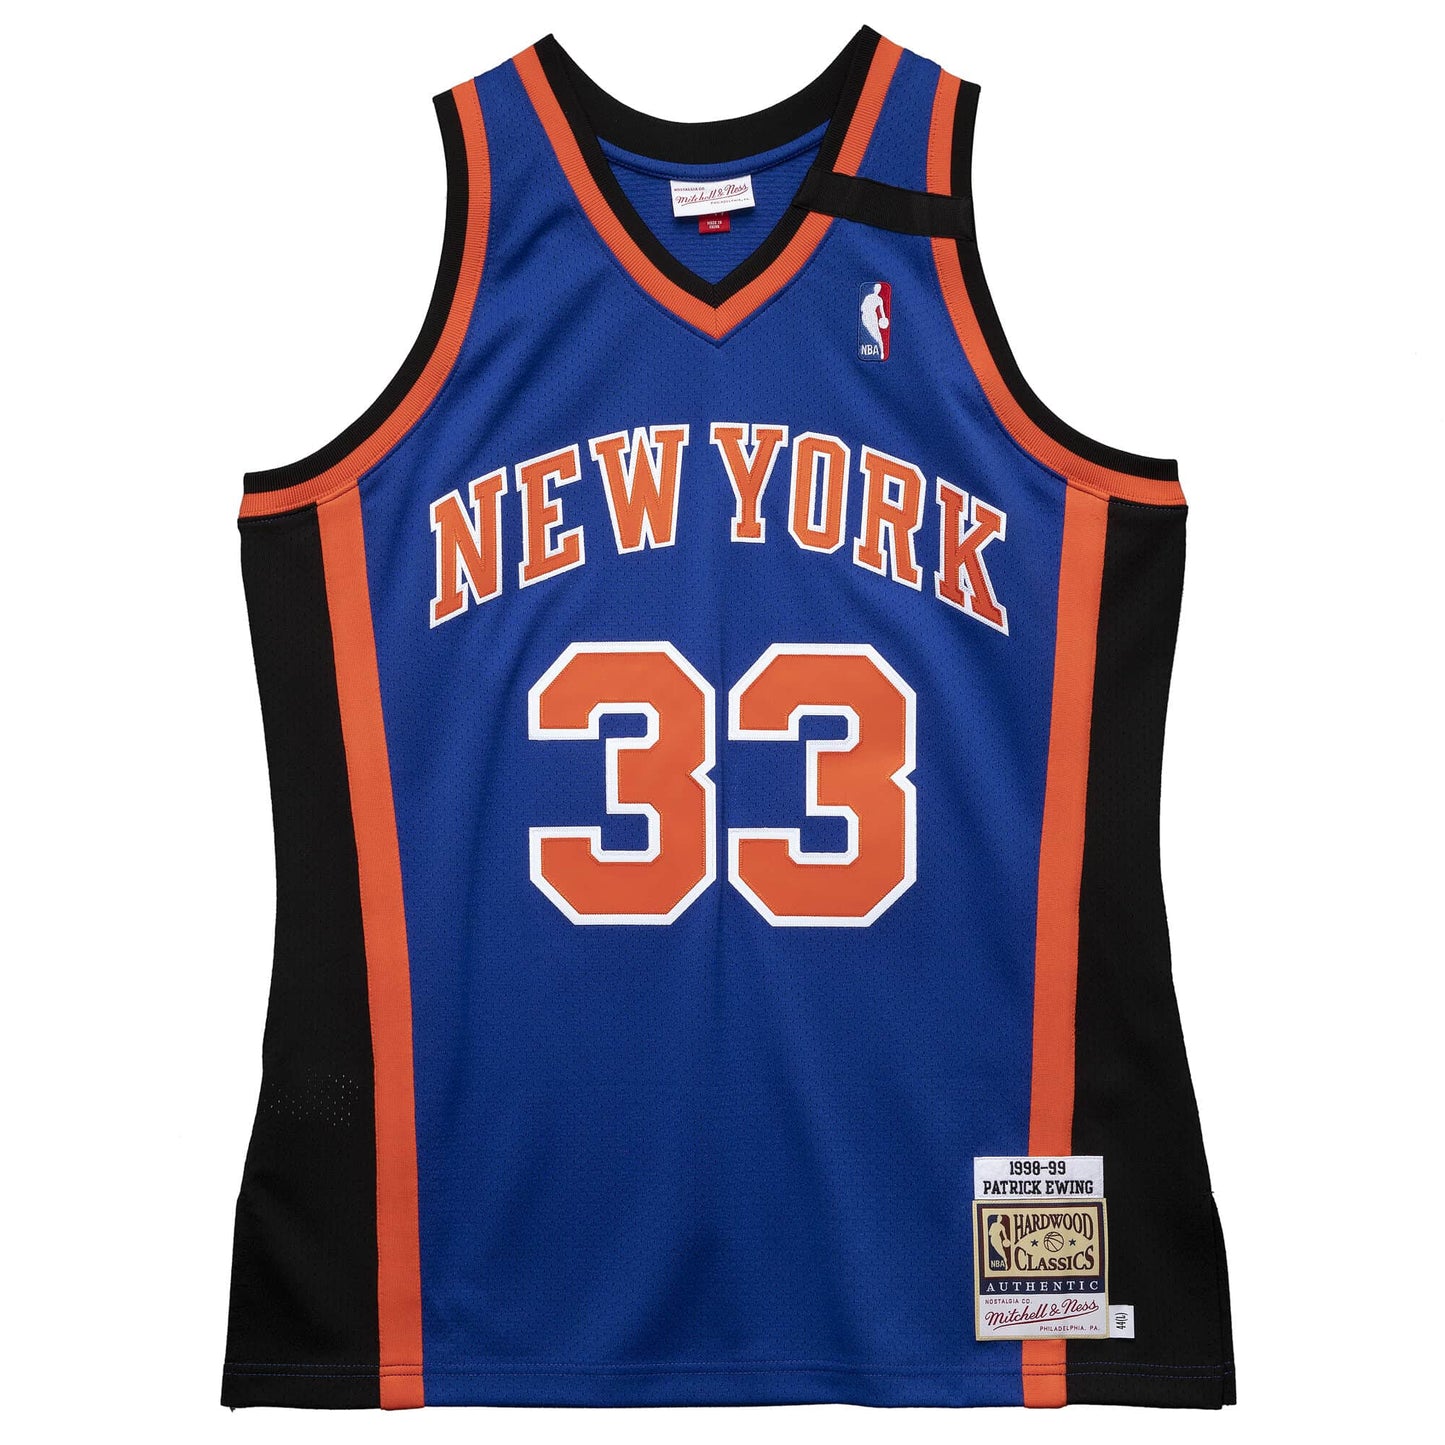 Authentic Patrick Ewing New York Knicks 1998-99 Jersey